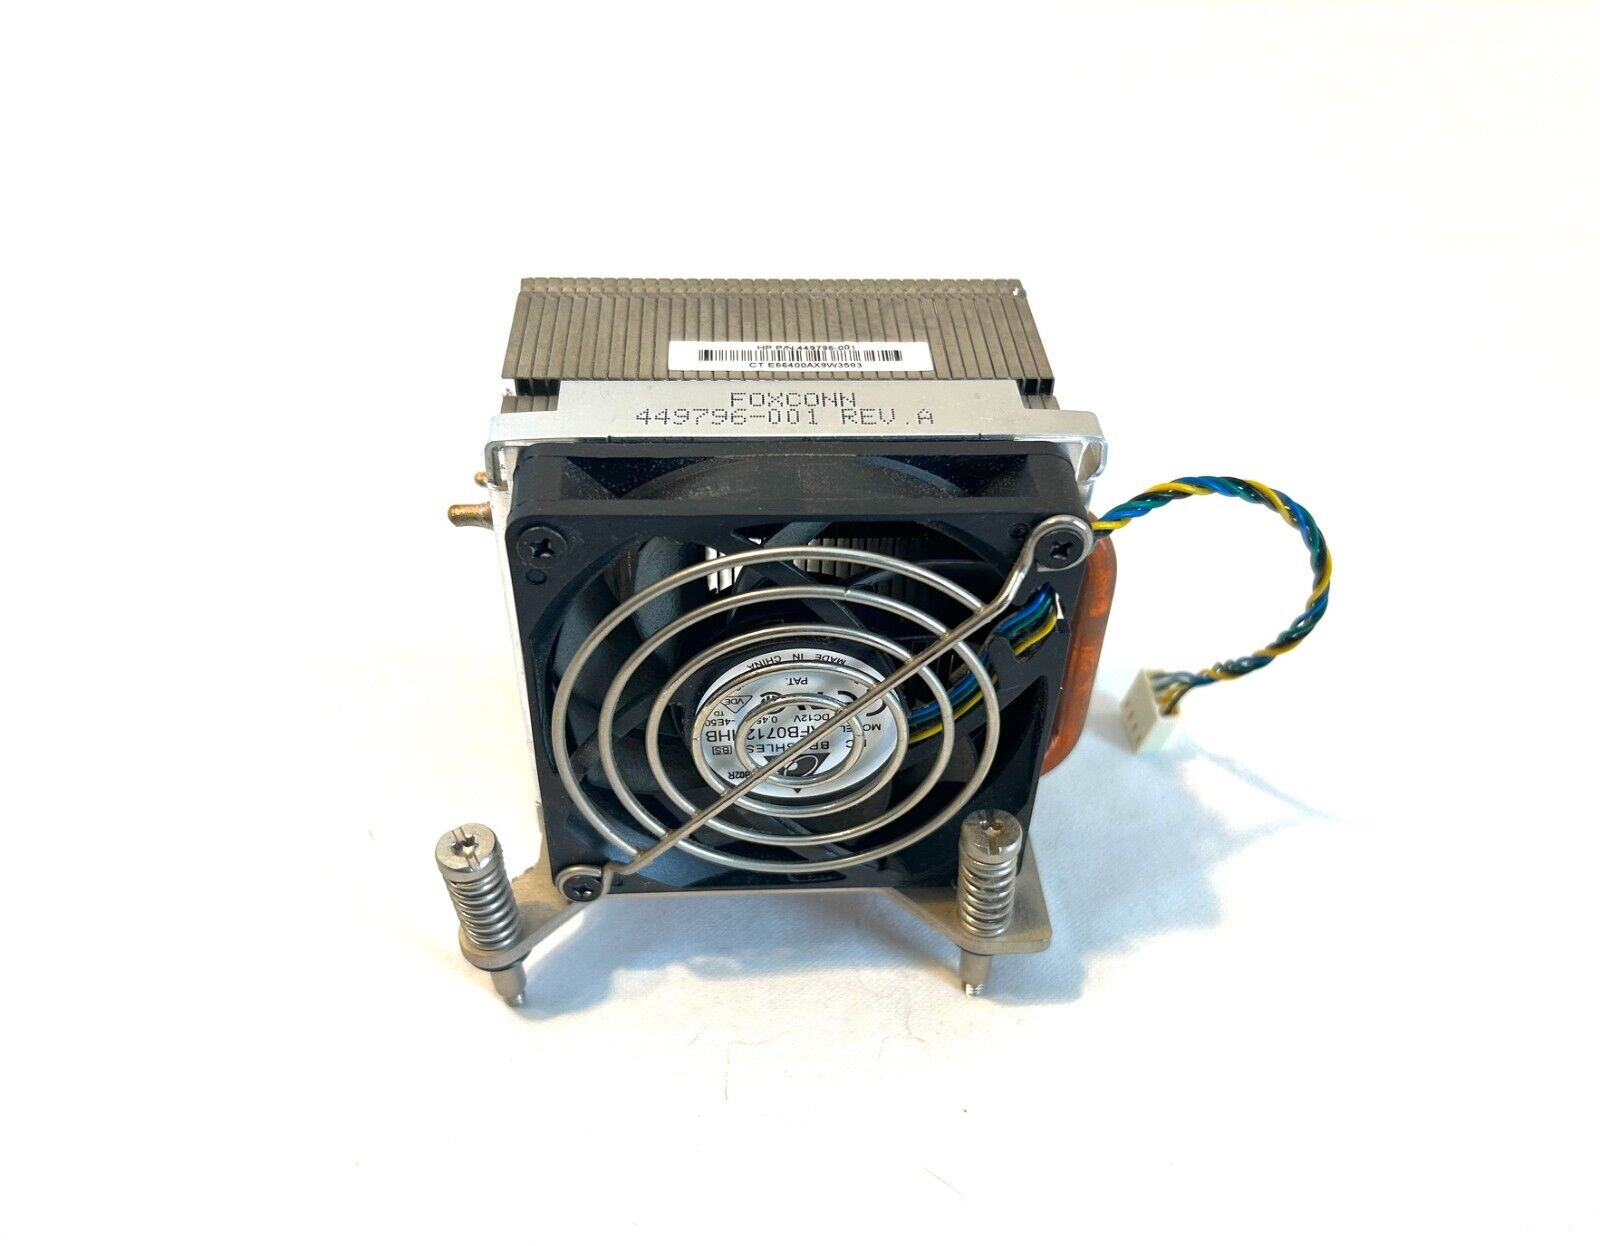 HP CPU Heat Sink Cooler  # 449796-001 Rev A - 100% F-Back, $0 Shipping 